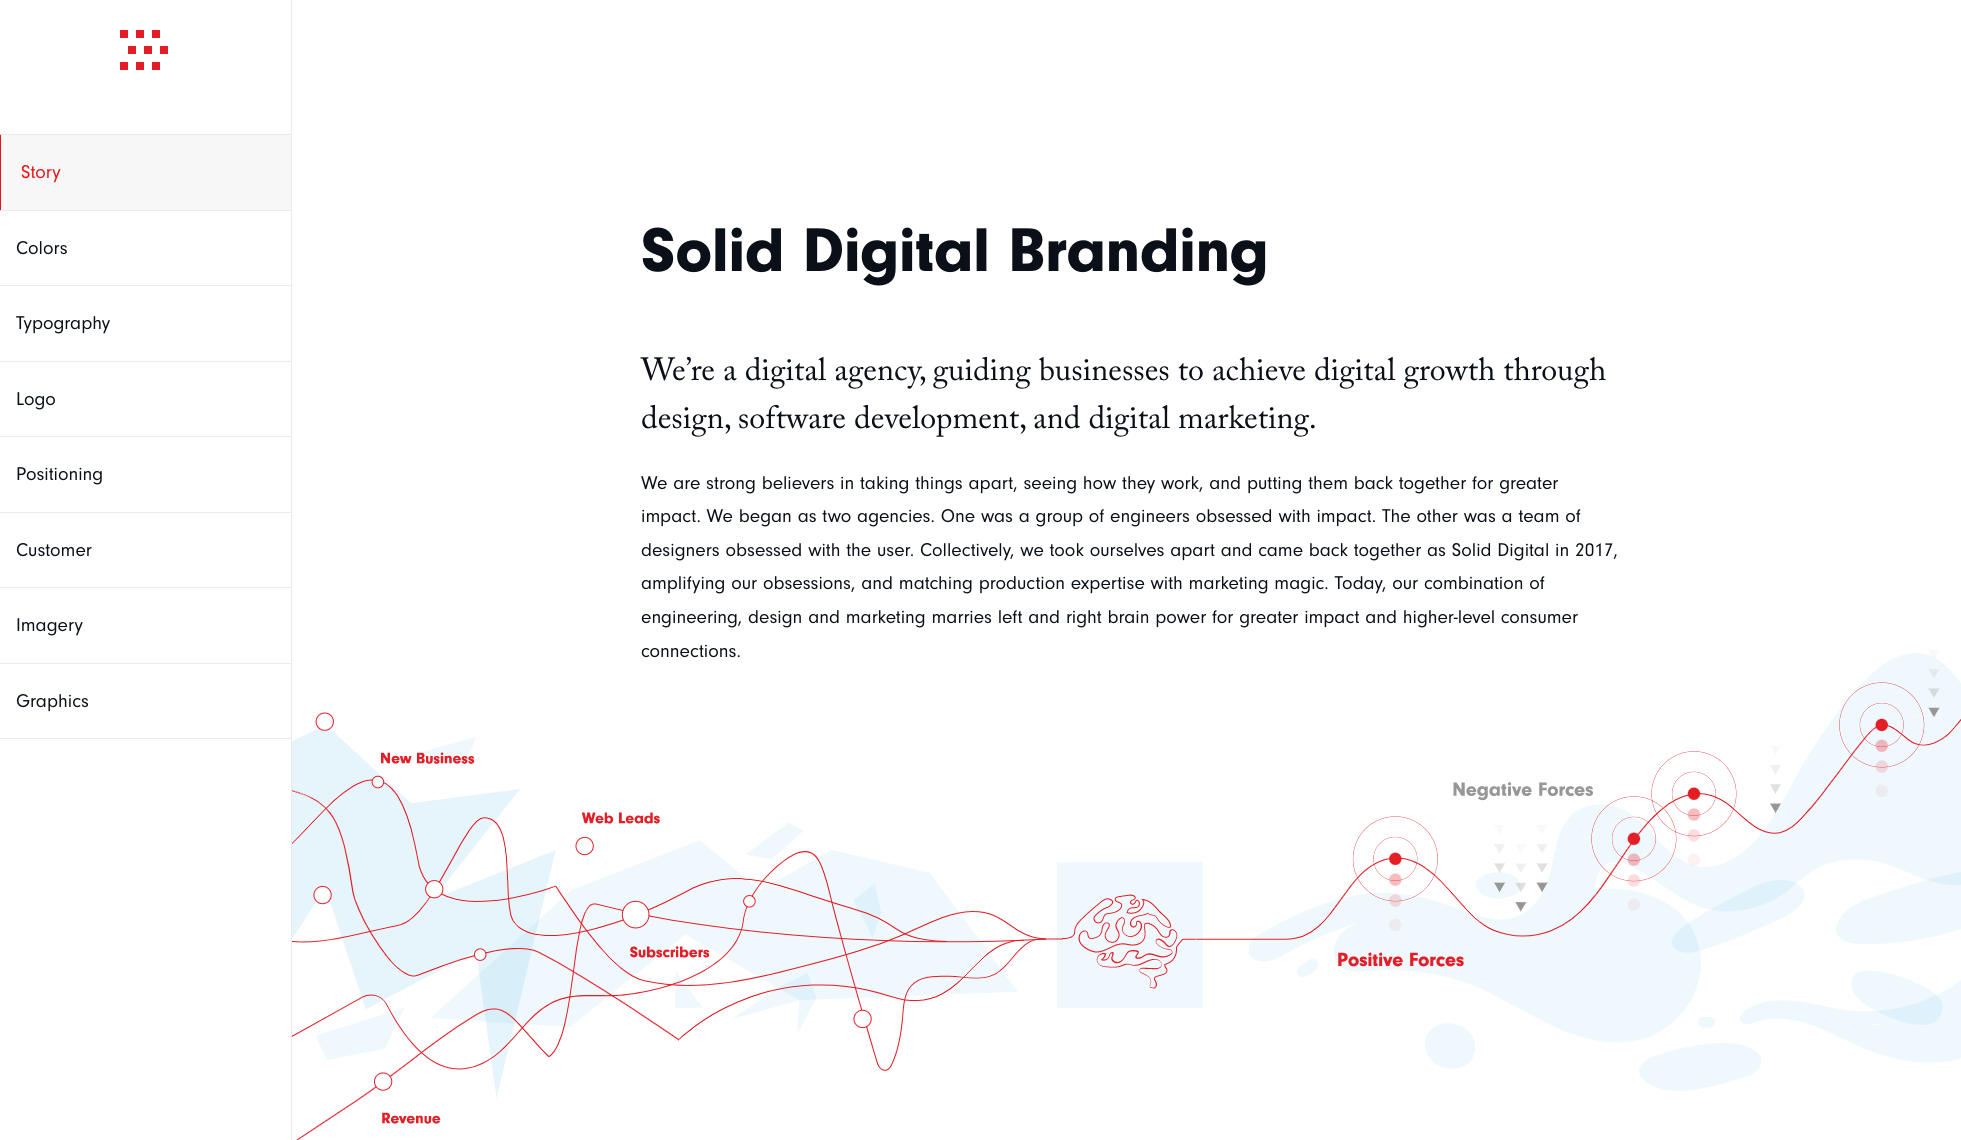 Solid digital branding